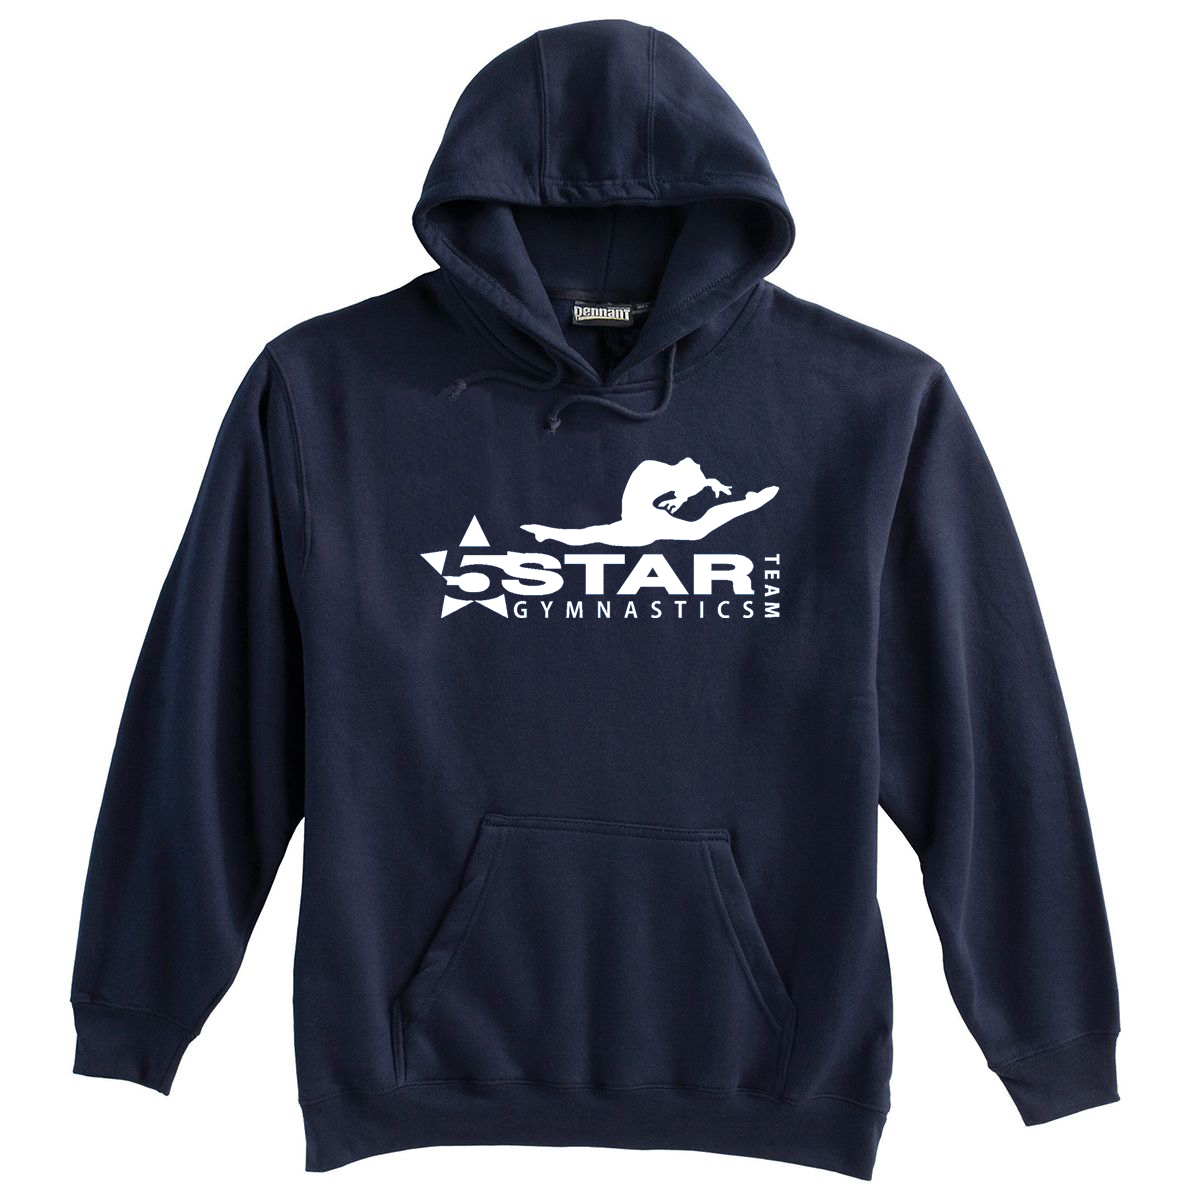 5 Star Gymnastics Sweatshirt